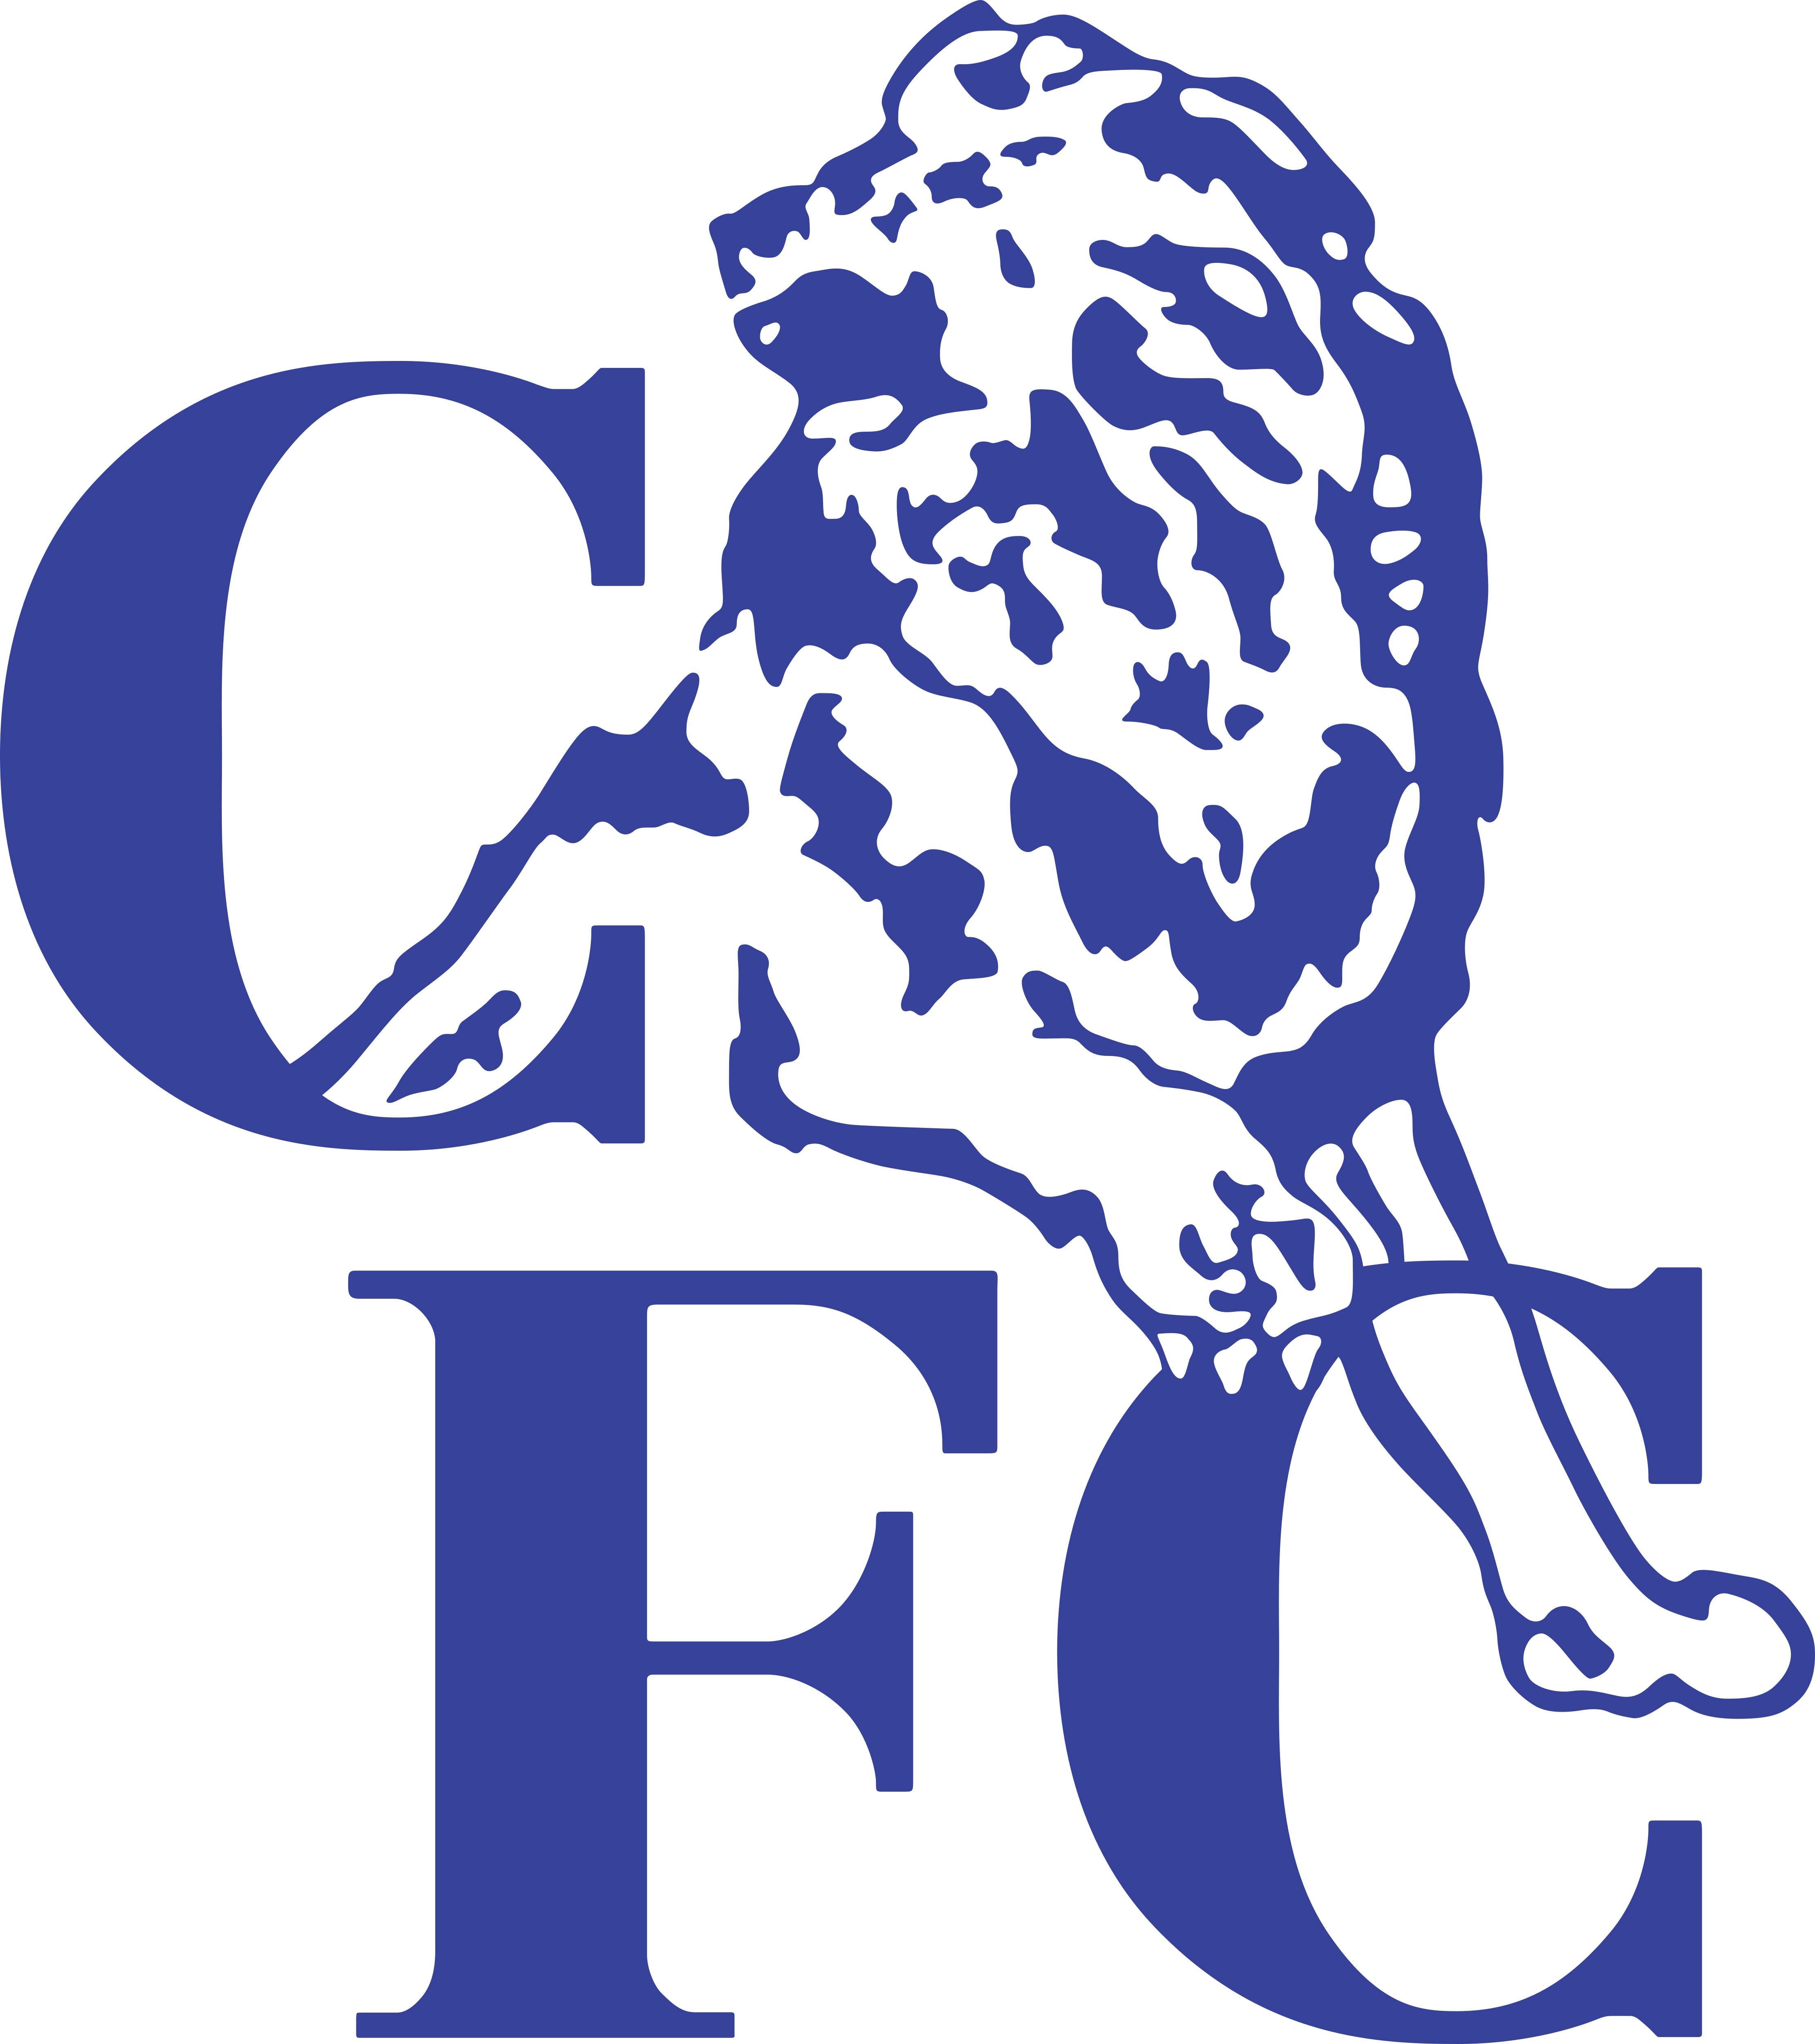 Chelsea FC - Logos Download